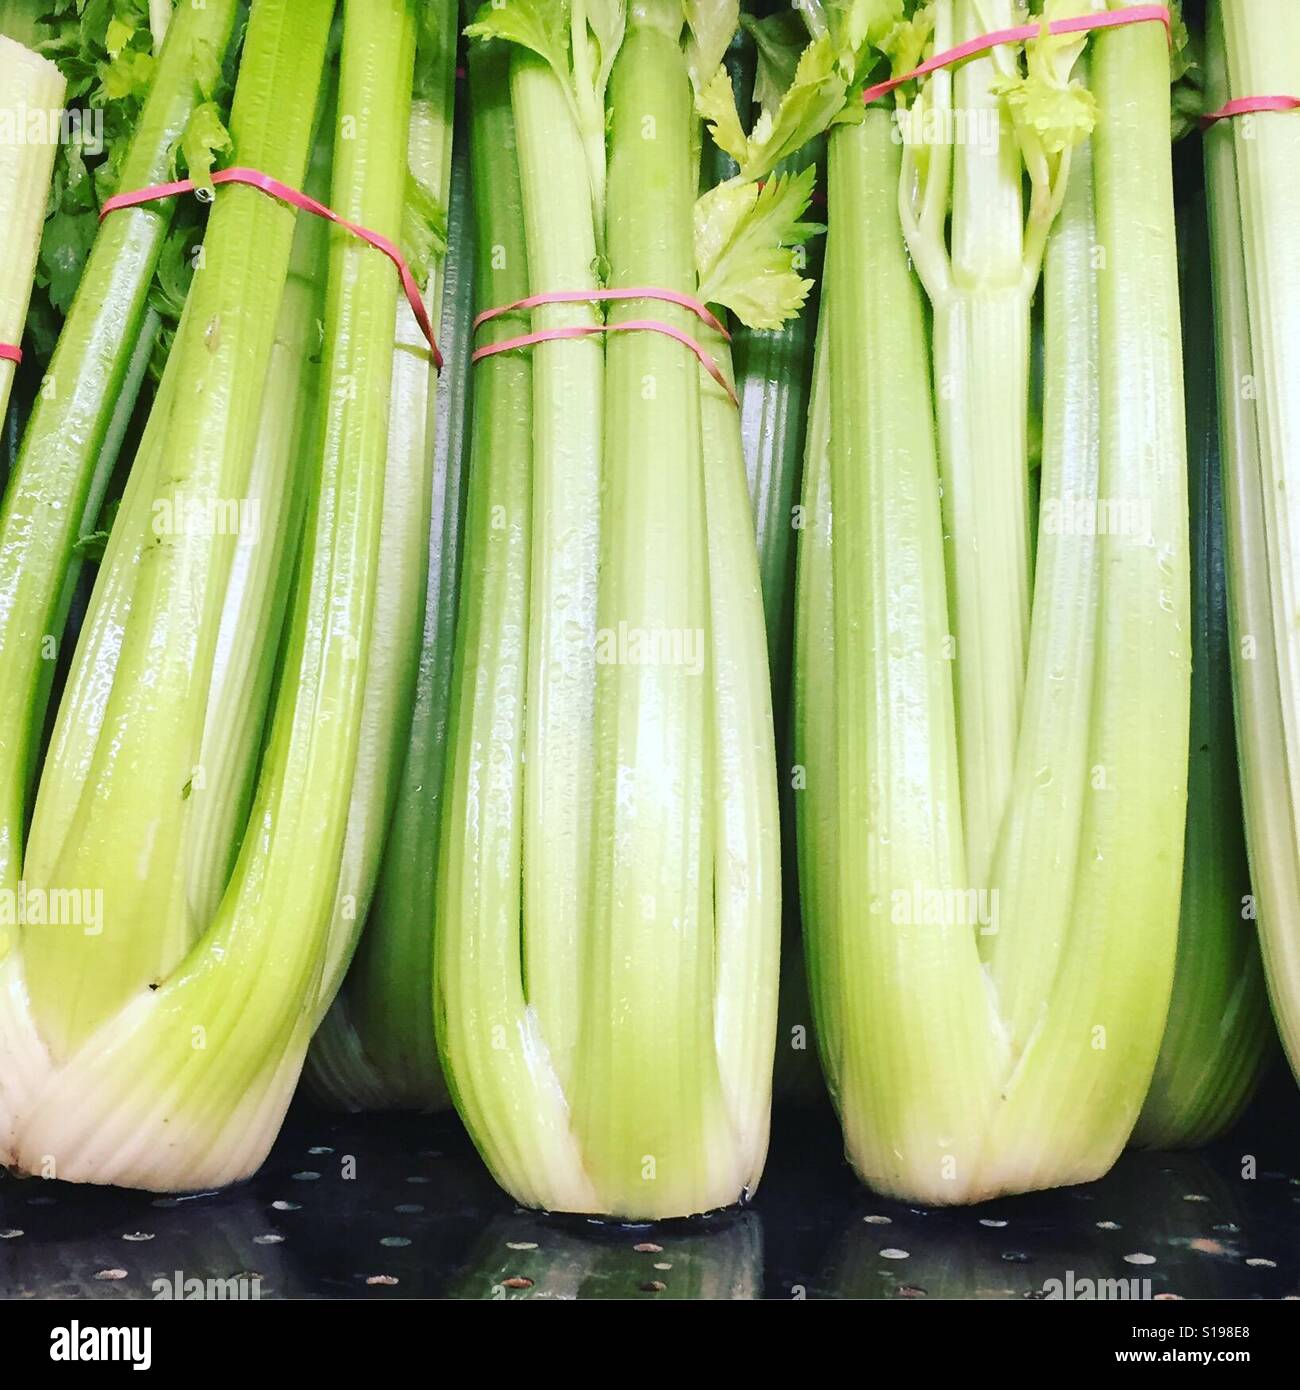 Celery stalks by K.R. Stock Photo